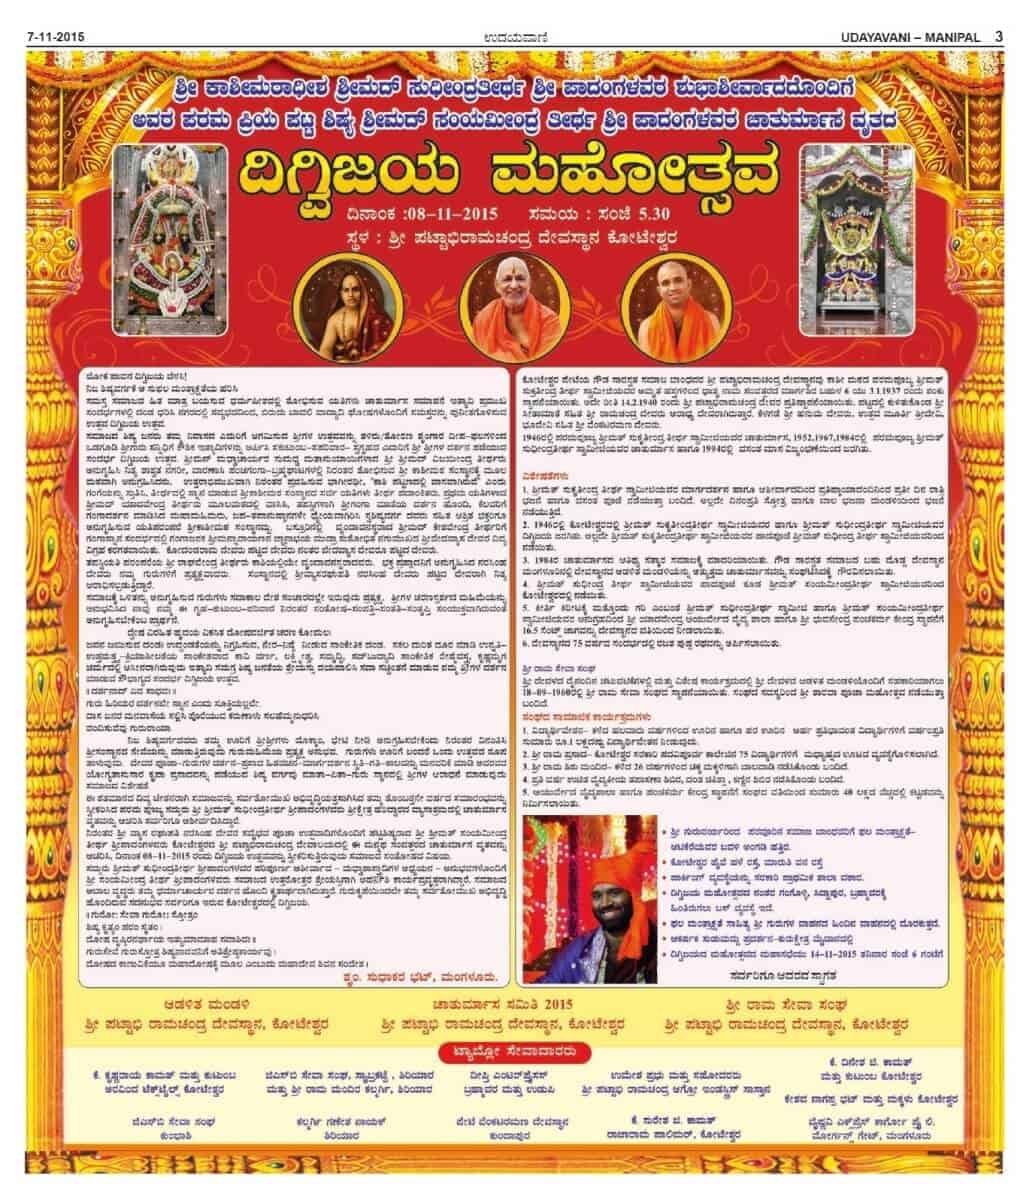 Image from post regarding Digvijaya Mahotsava in Koteshwara